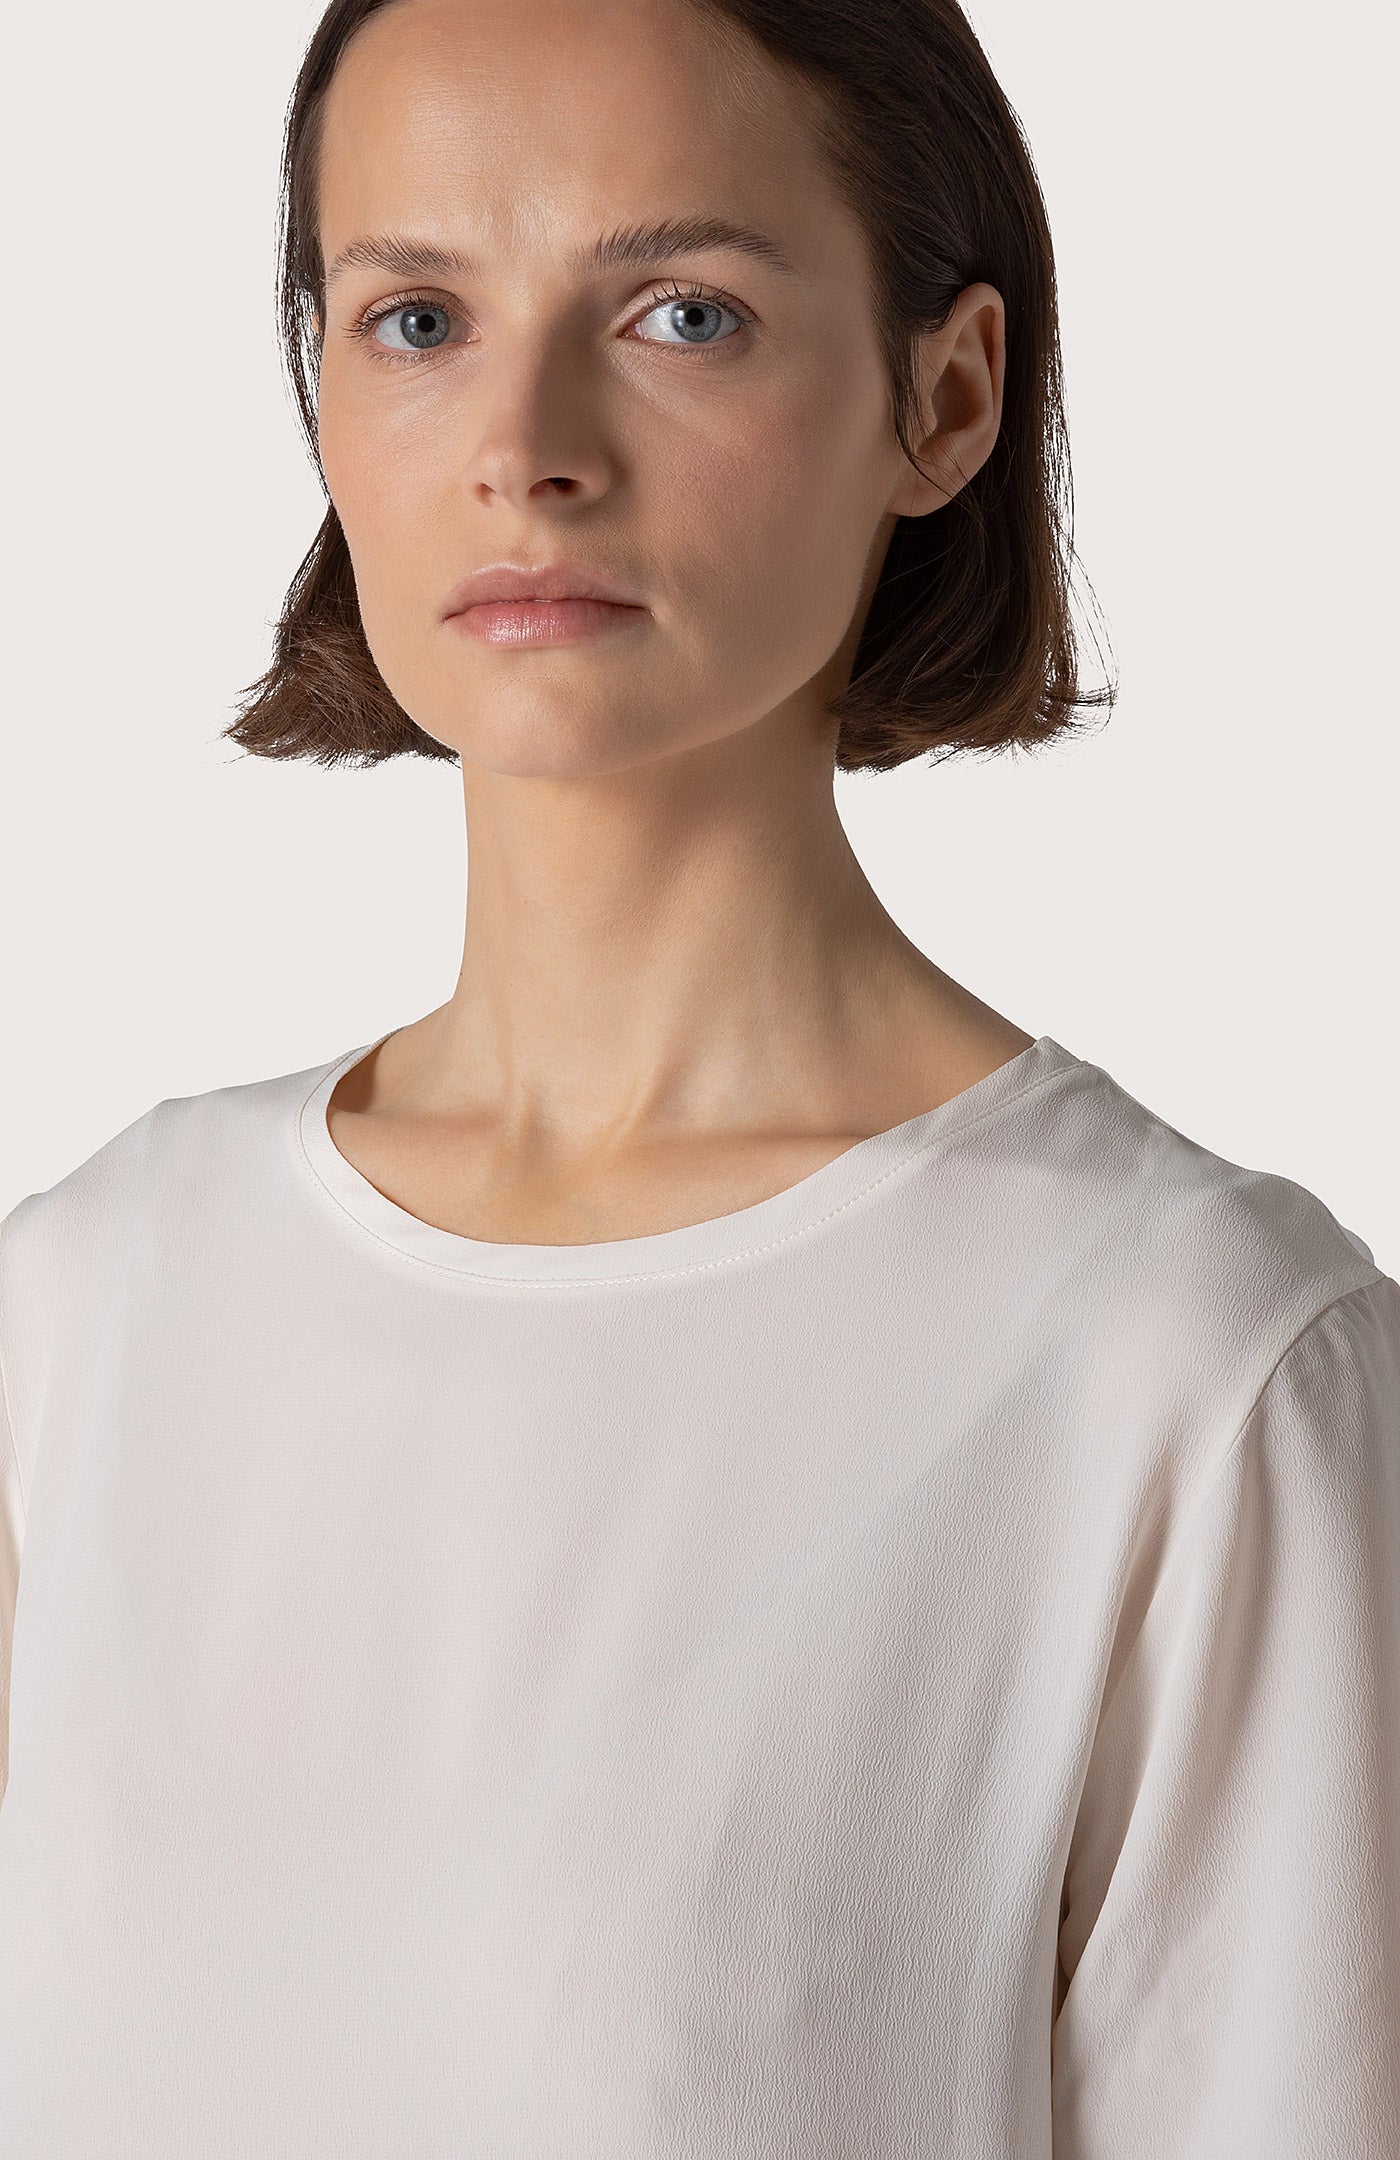 T-Shirt Donna dalle linee eleganti